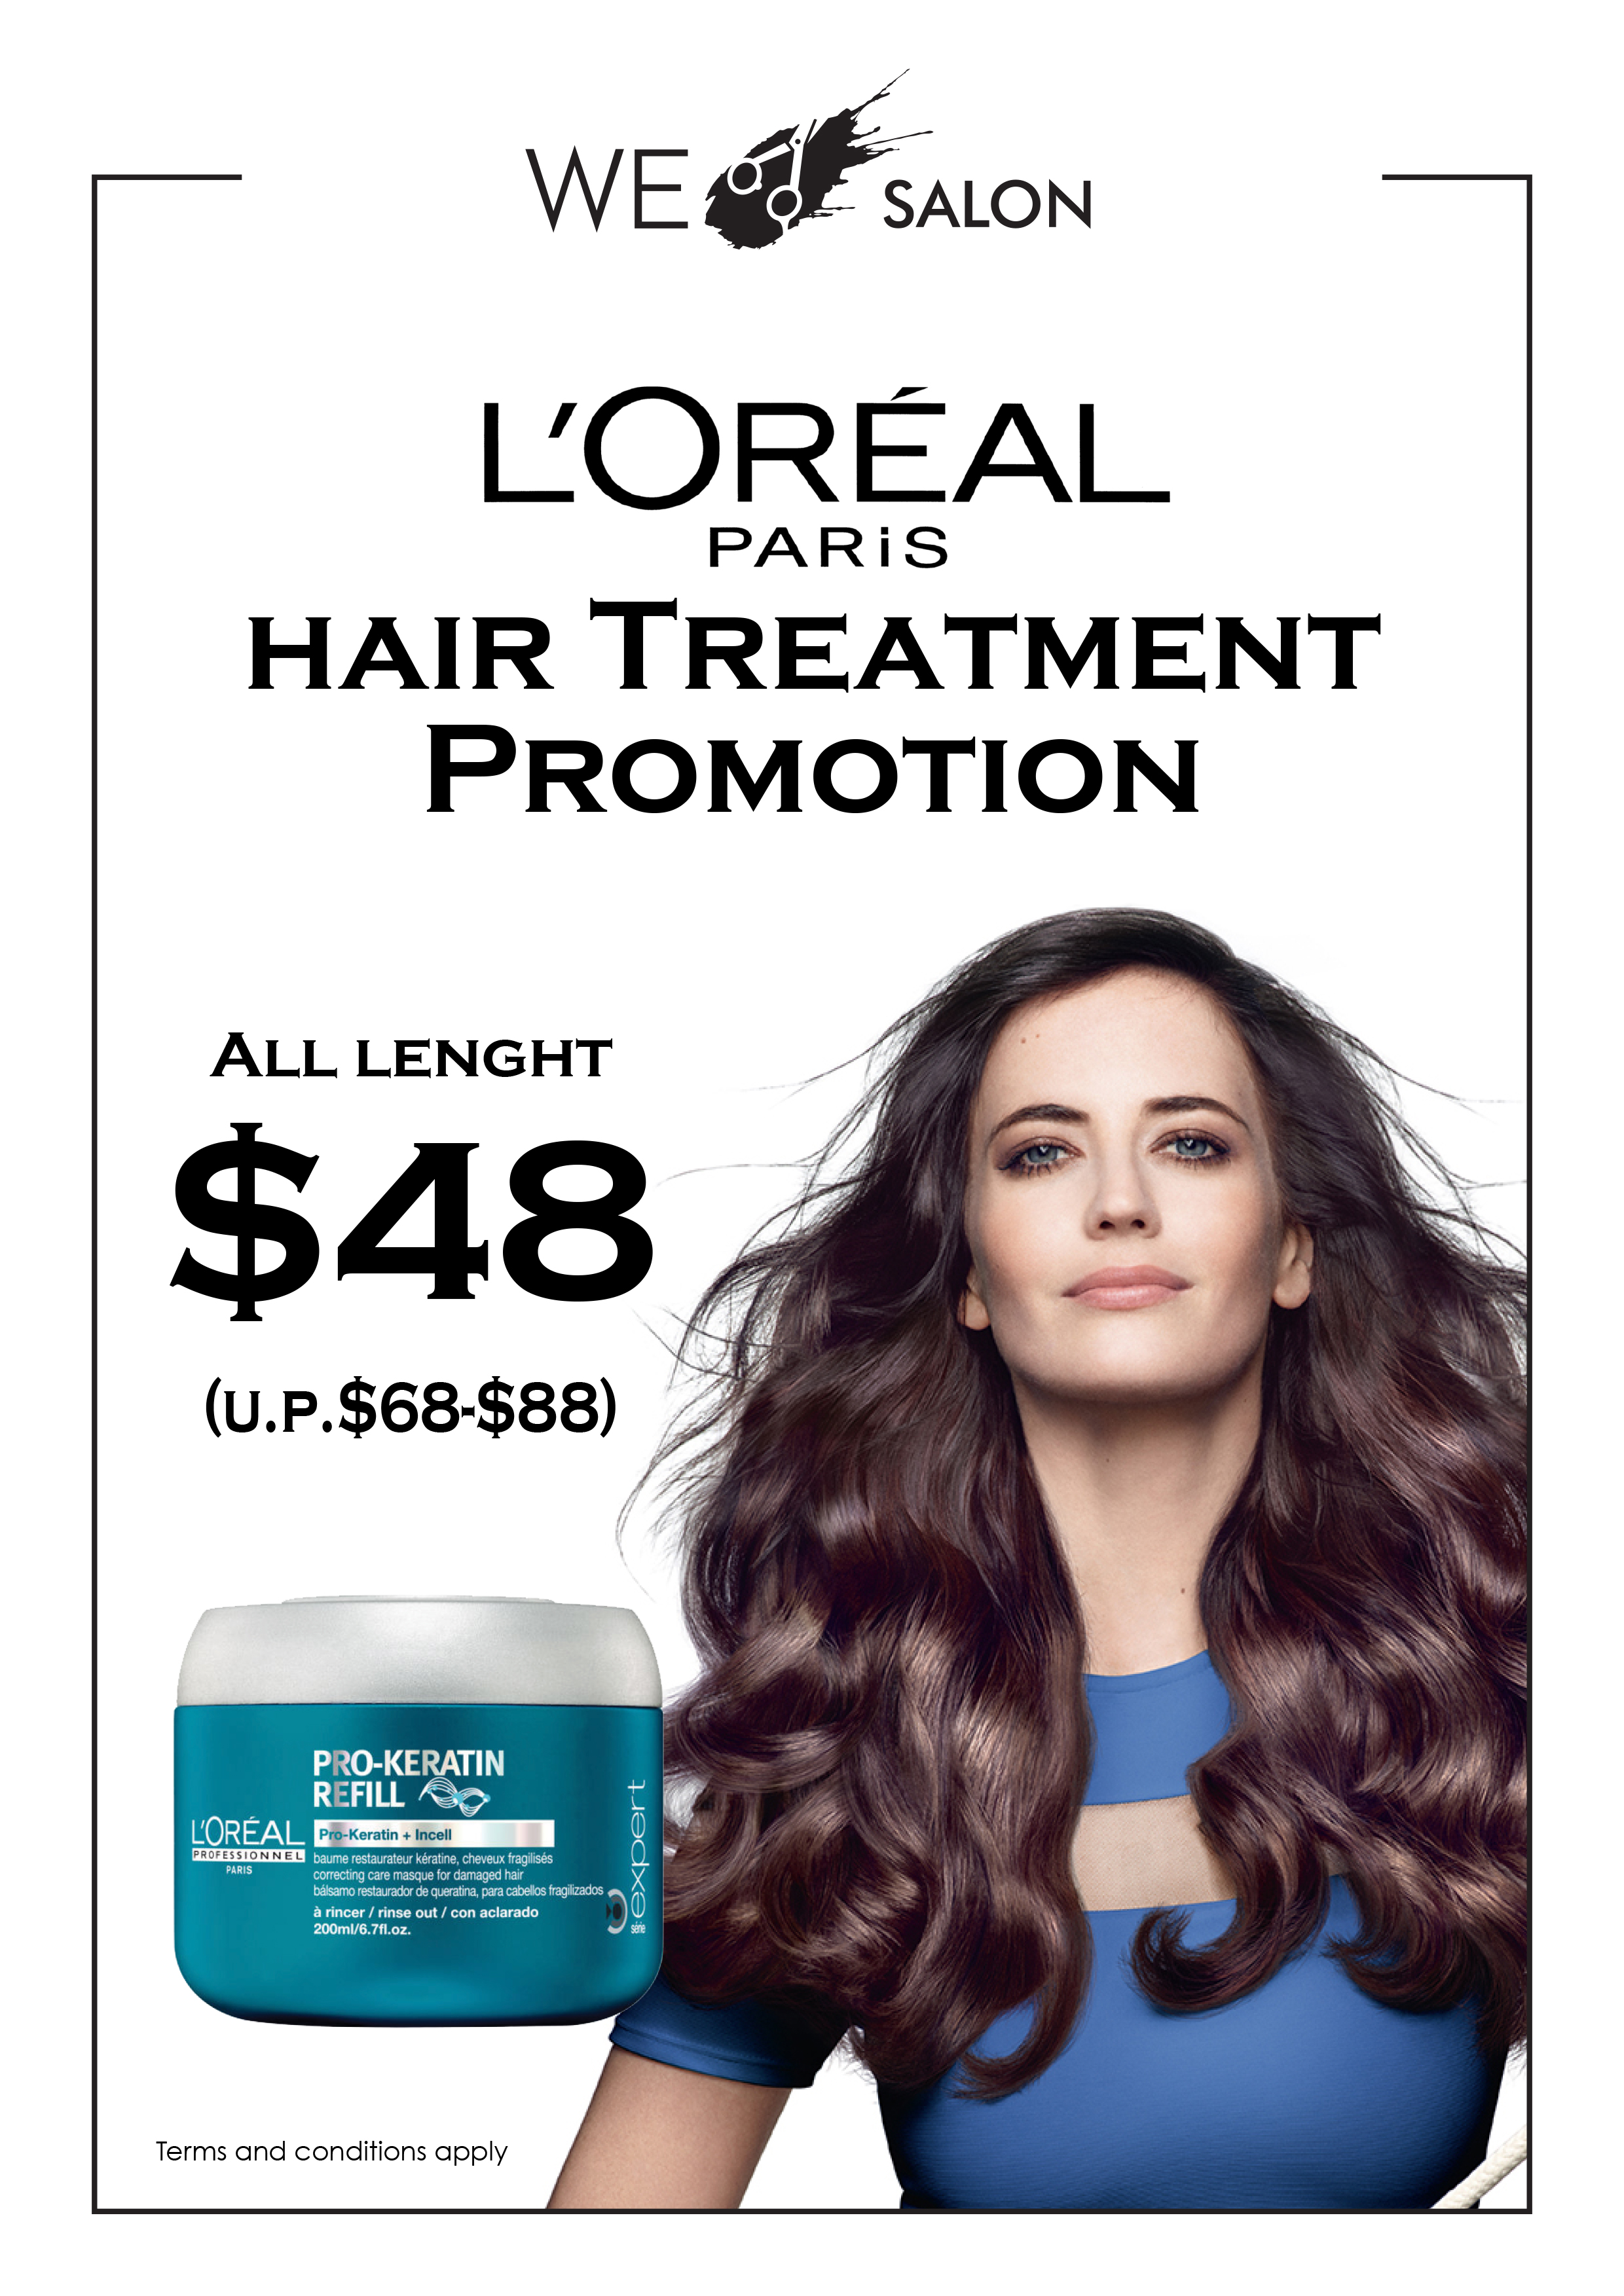 L'oreal Paris Hair Treatment Promotion $48 (All Hair Length)